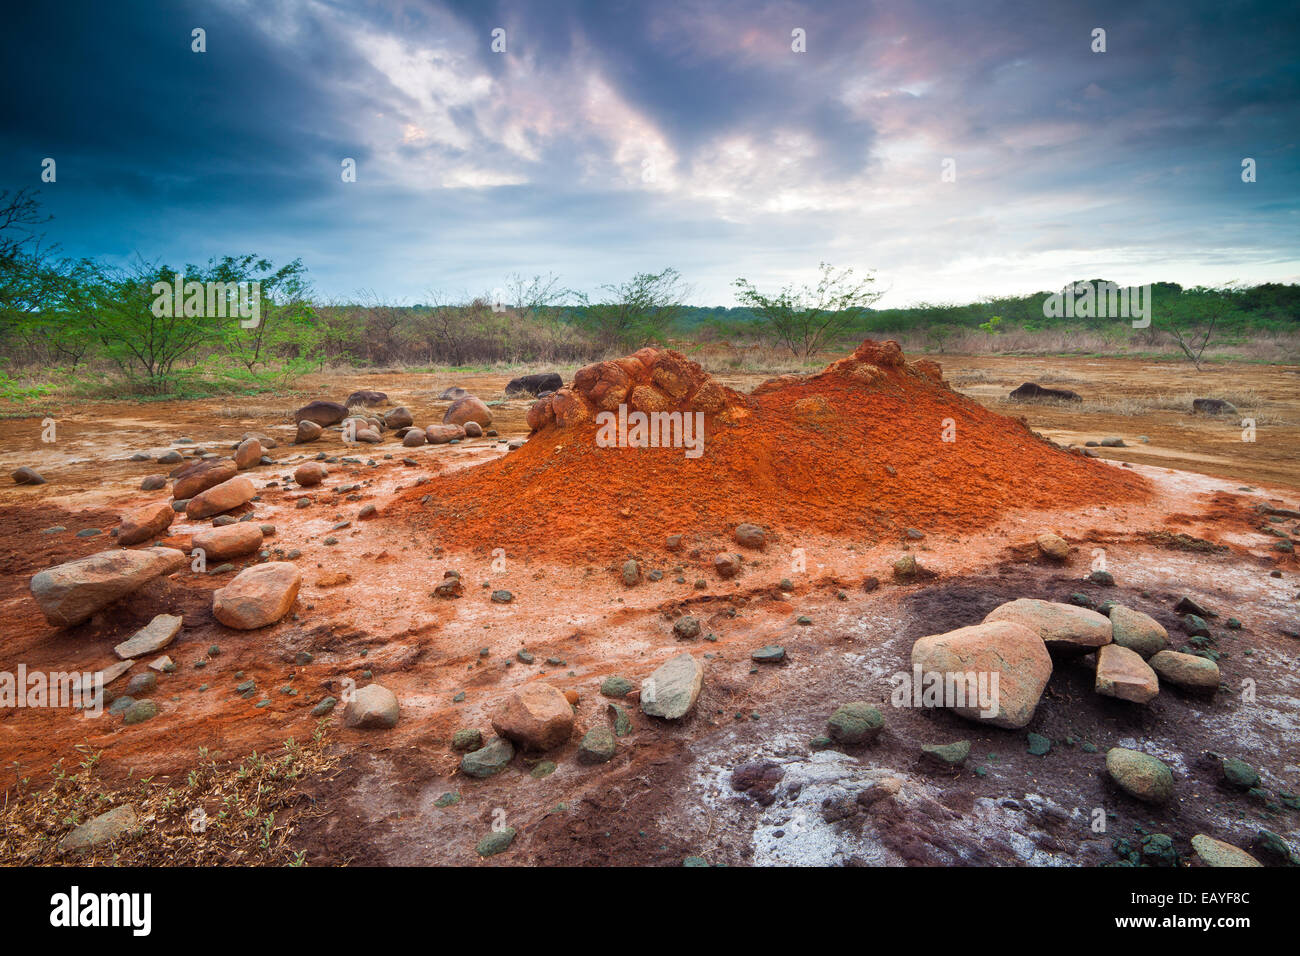 Panama landscape with eroded soil in Sarigua national park (desert), Herrera province, Azuero peninsula, Republic of Panama, Central America. Stock Photo